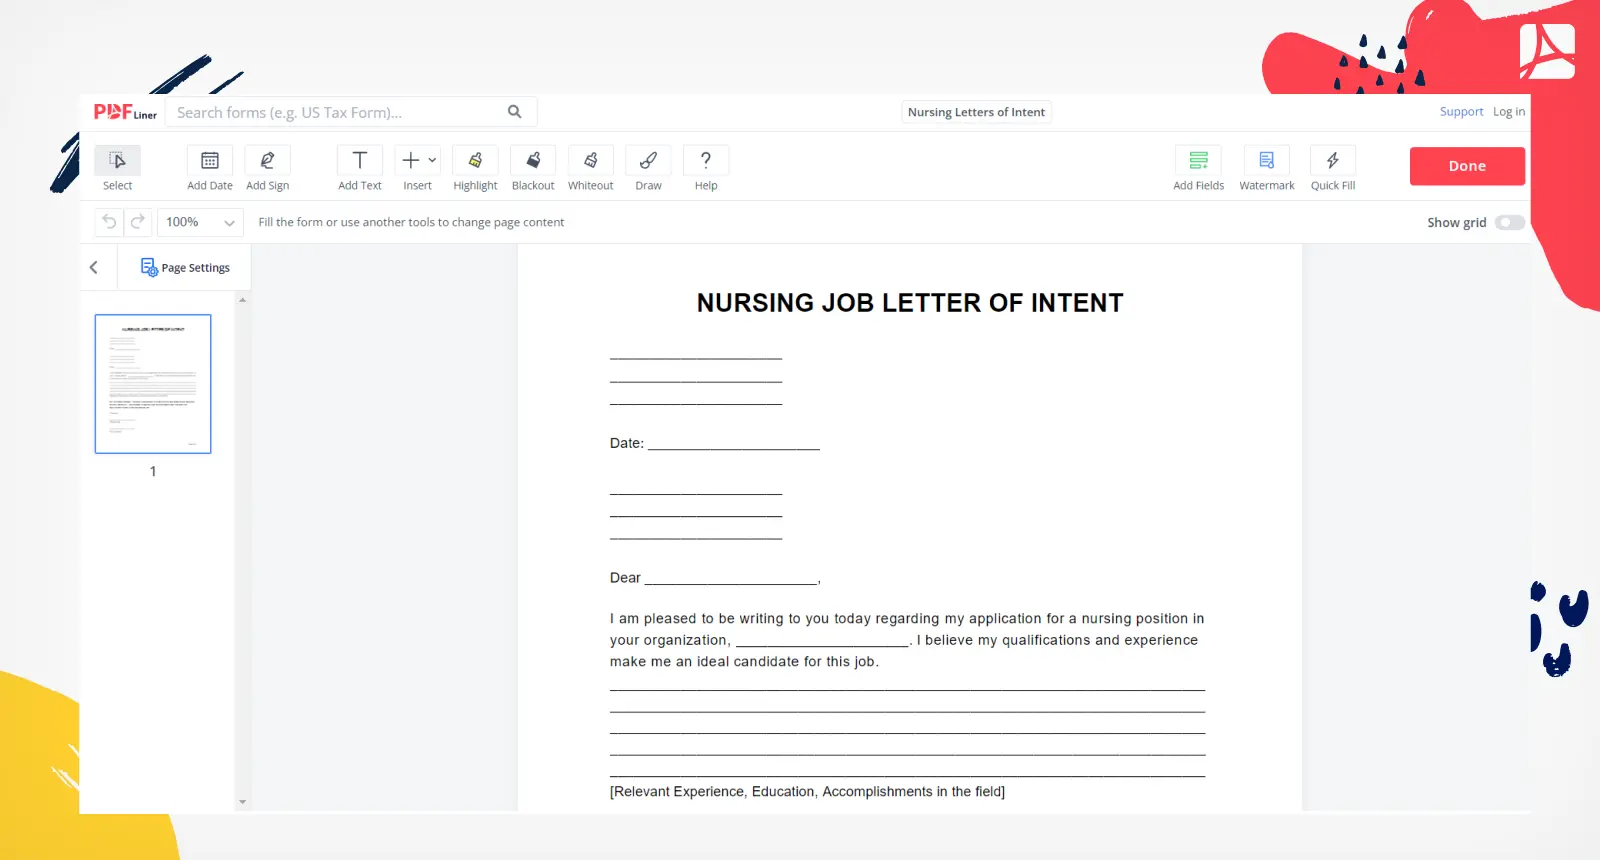 Nursing Letters of Intent Form Screenshot